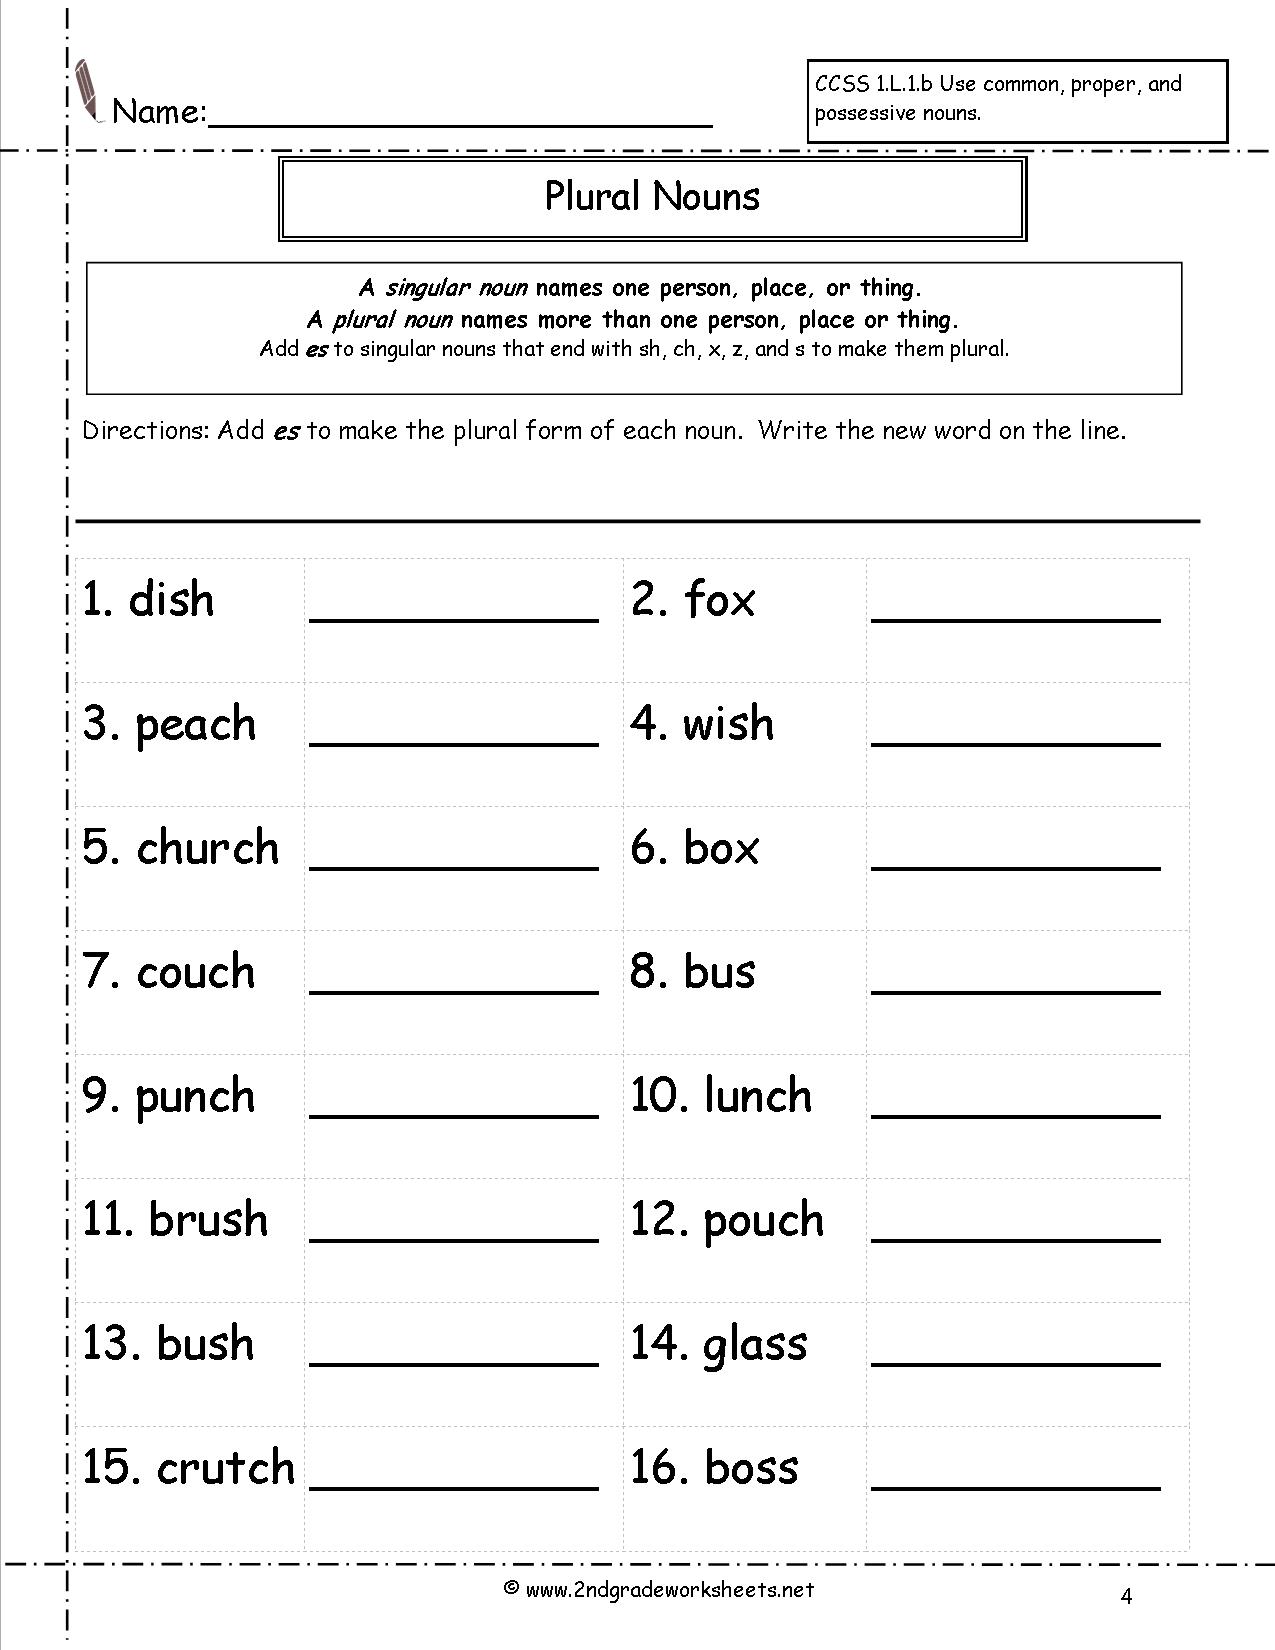 plural-noun-form-interactive-worksheet